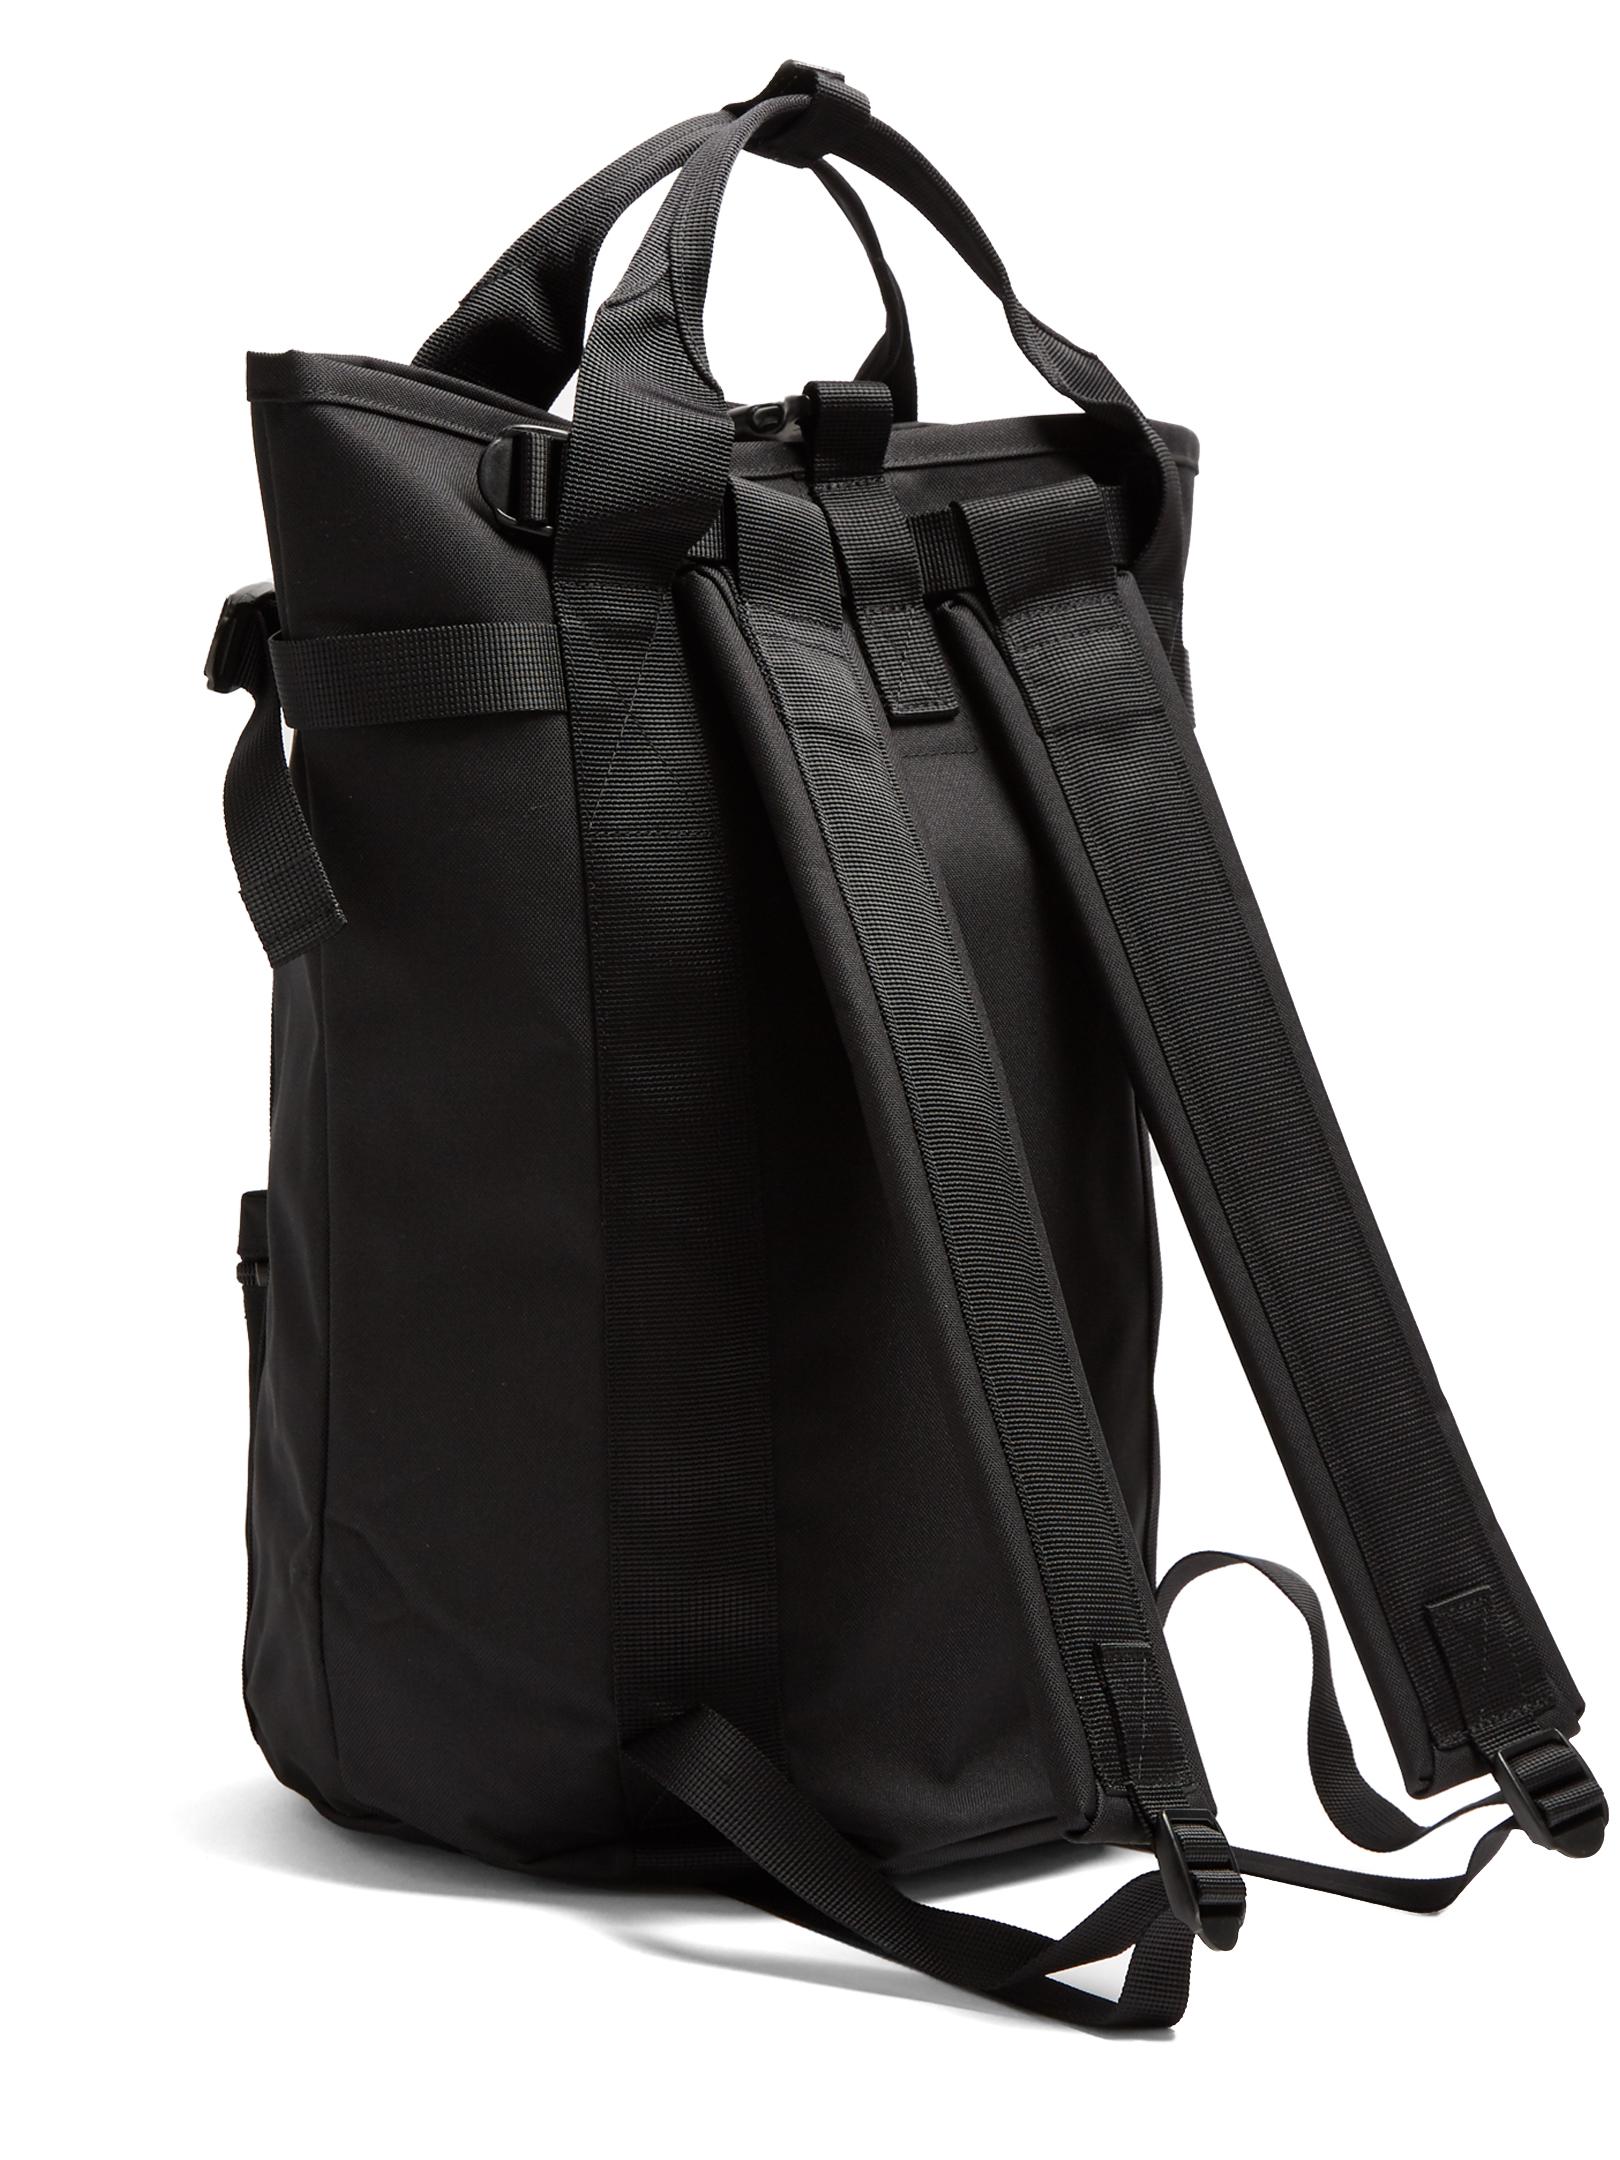 Porter Union Canvas Backpack in Black for Men - Lyst